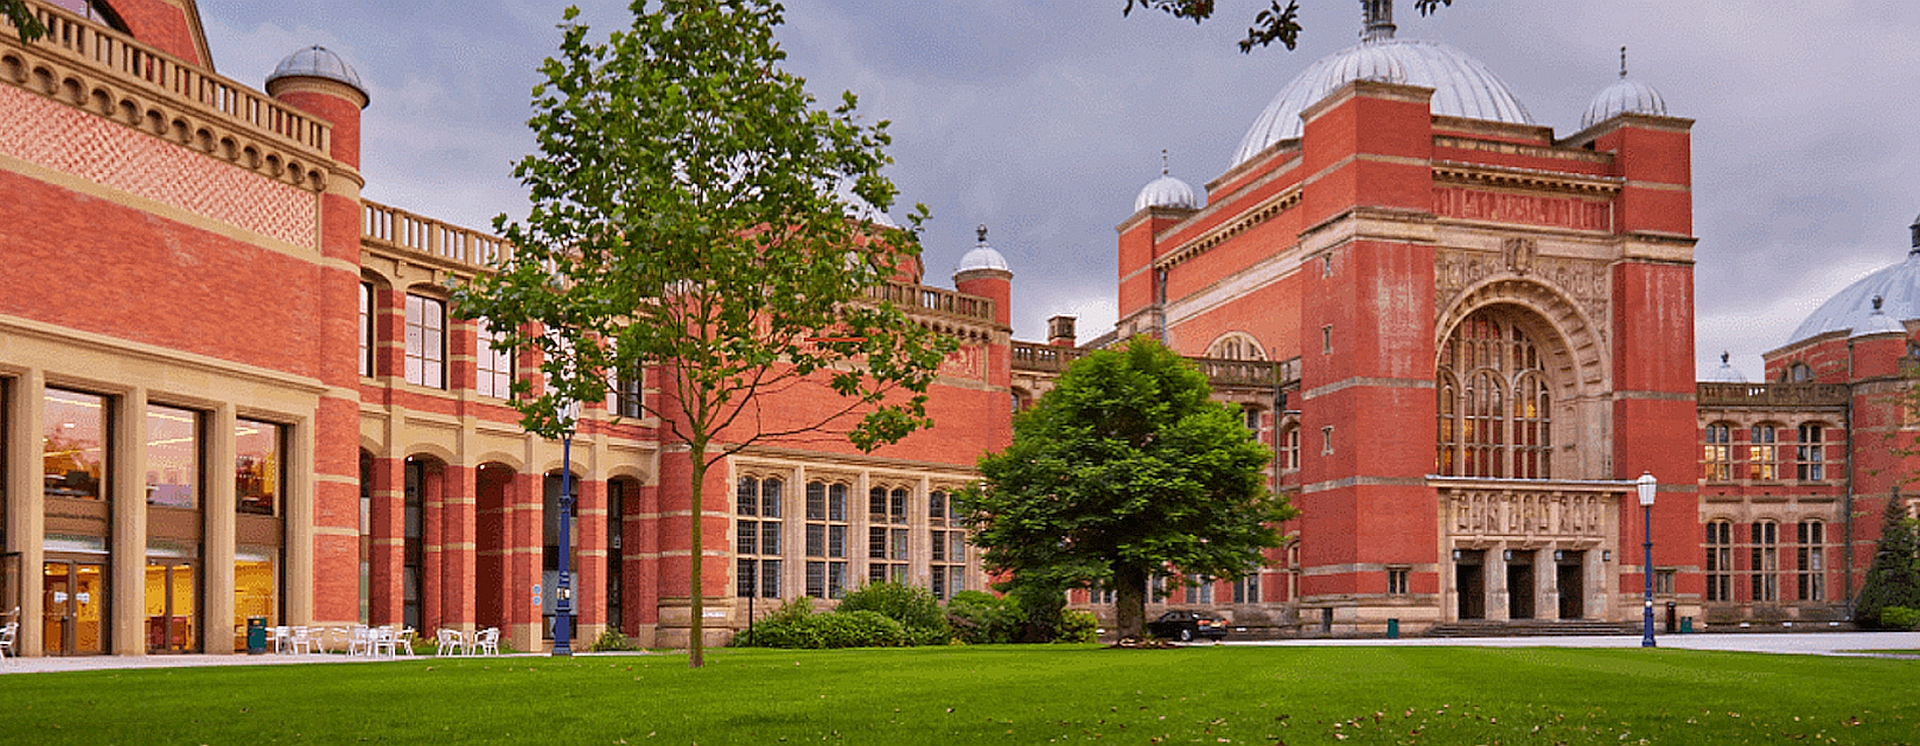 Aston Webb buildings, University of Birmingham